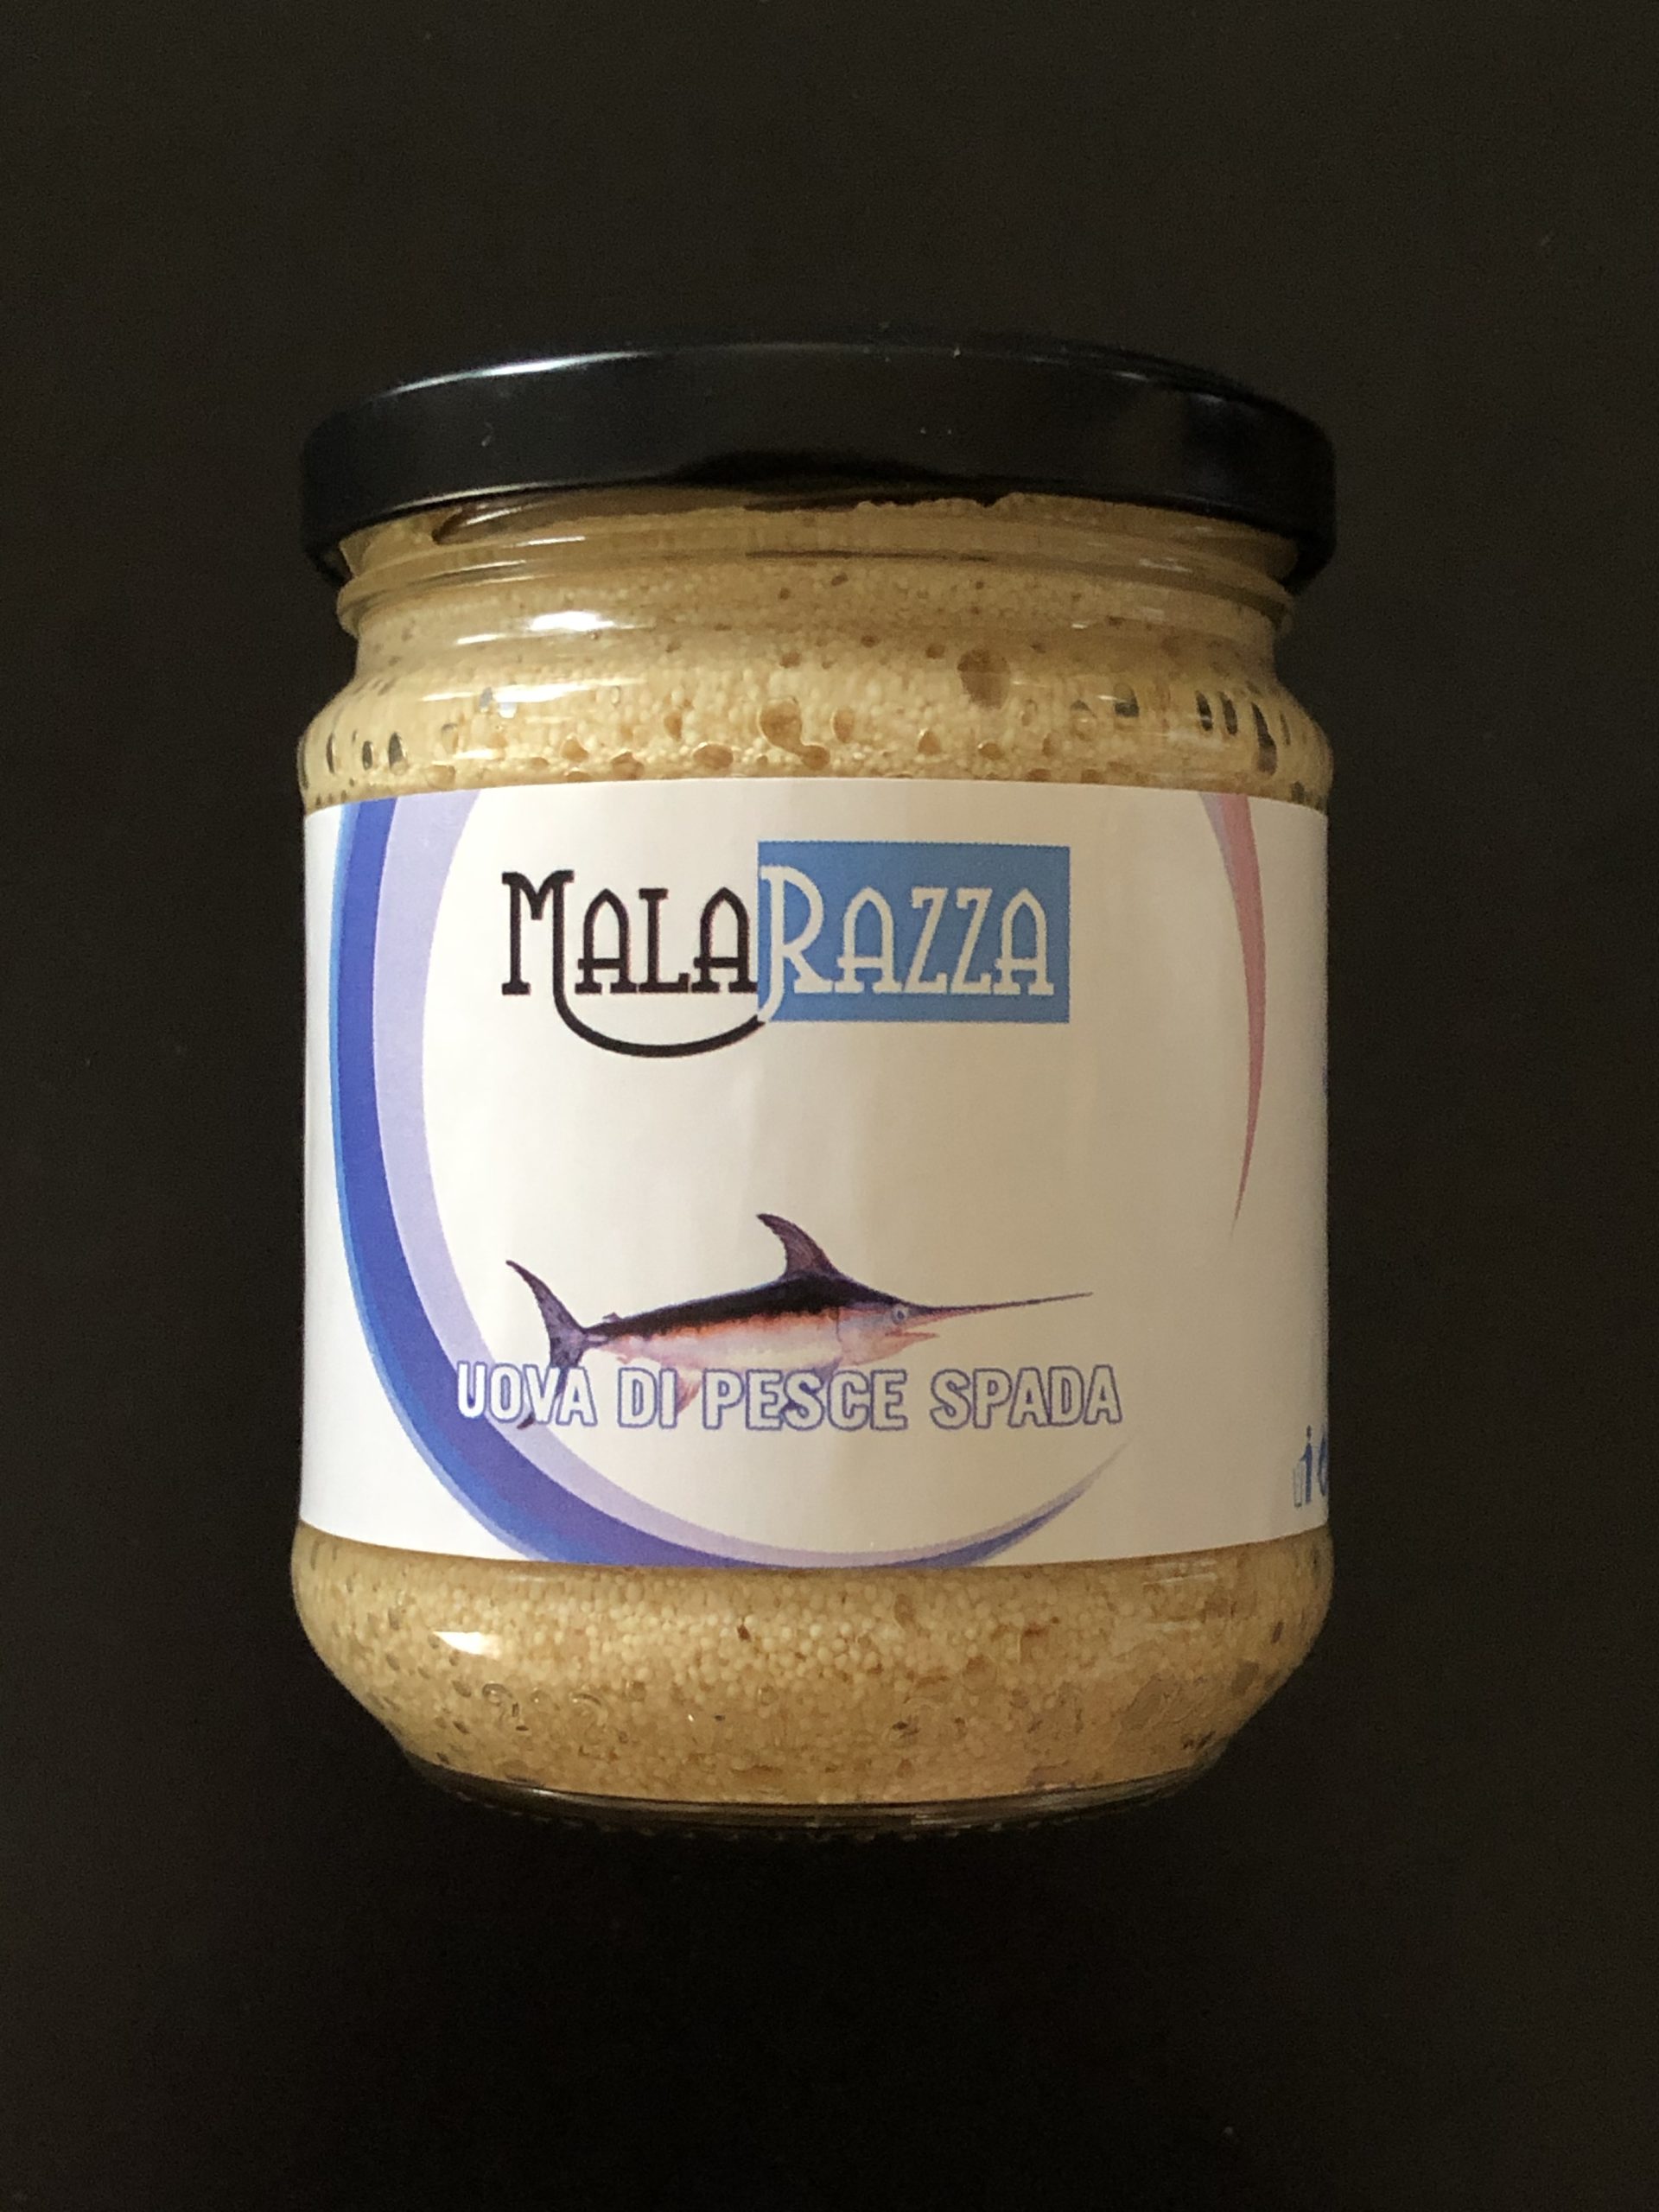 malarazza food made in italy uova di pesce spada